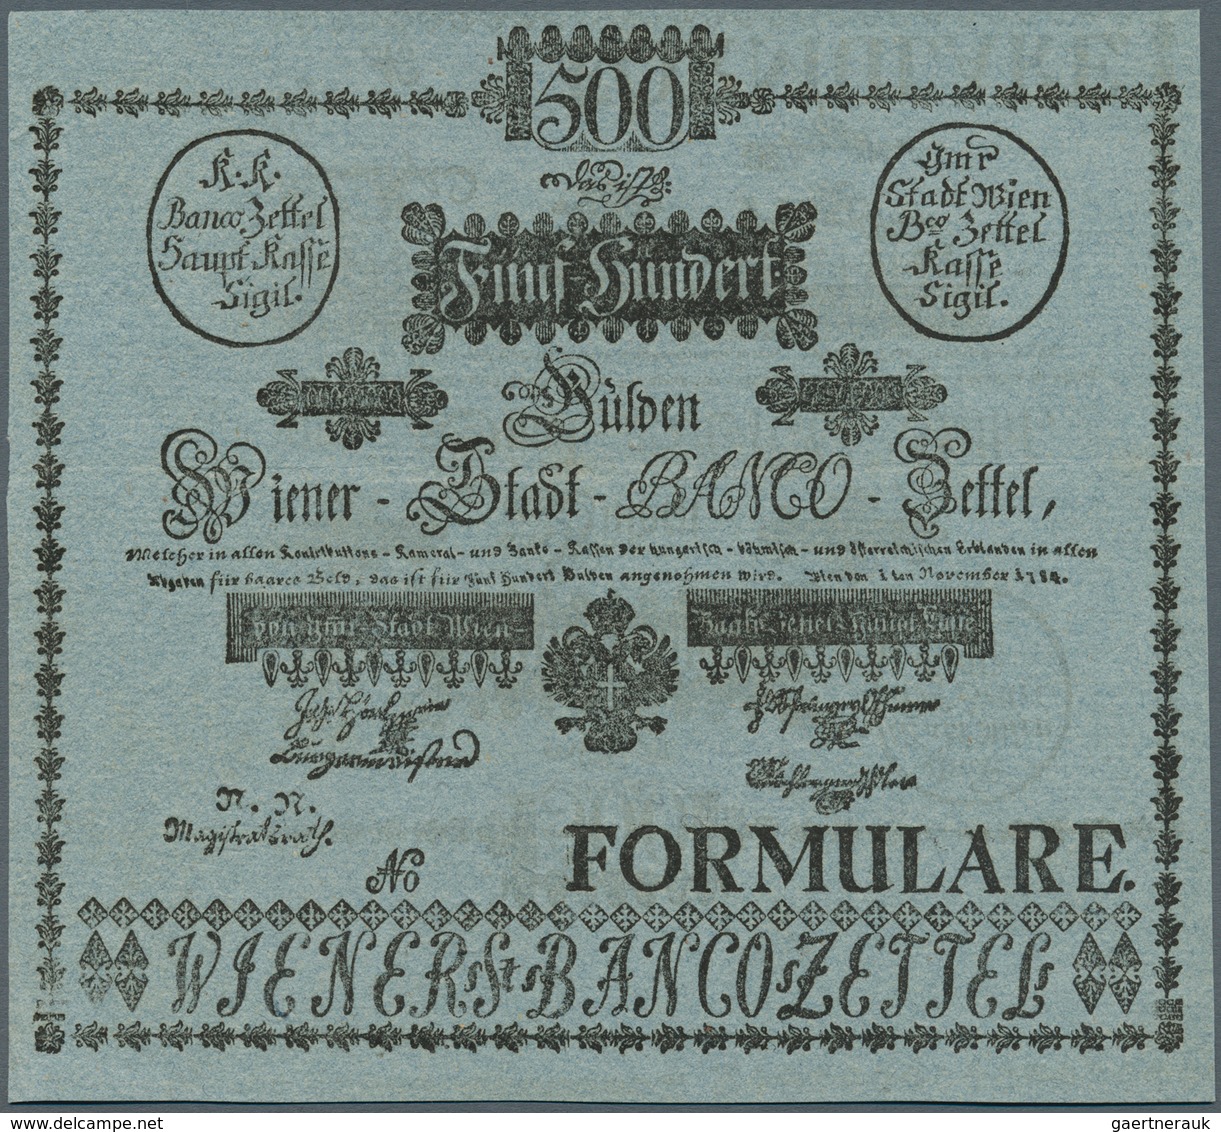 01038 Austria / Österreich: 500 Gulden 1784 P. A20b FORMULAR, With Only One Horizontal And Vertical Fold, - Austria